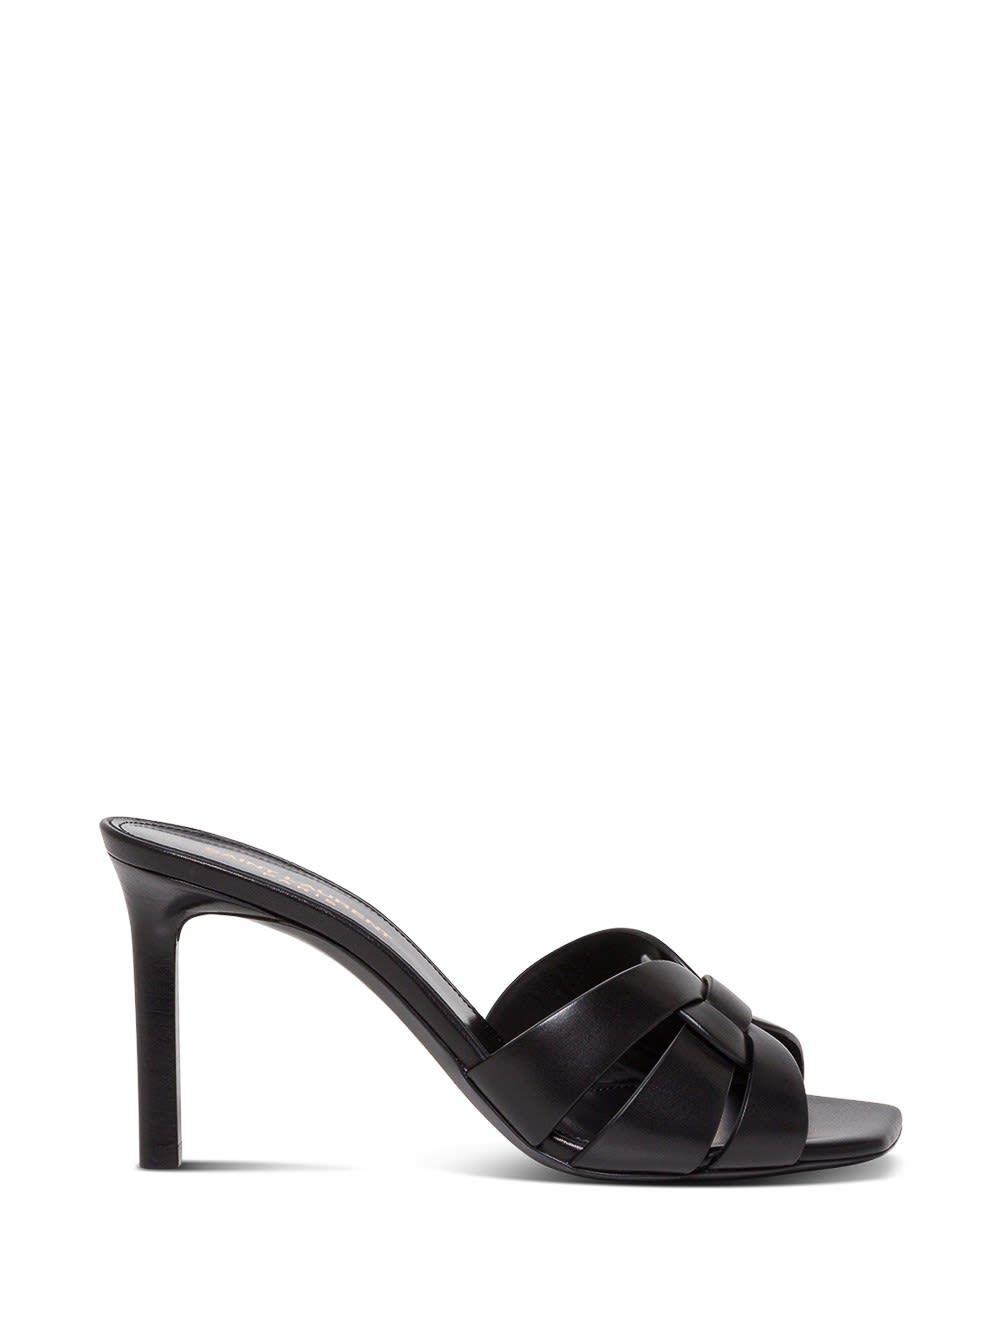 Buy Saint Laurent Tribute Sandals In Black Leather online, shop Saint Laurent shoes with free shipping